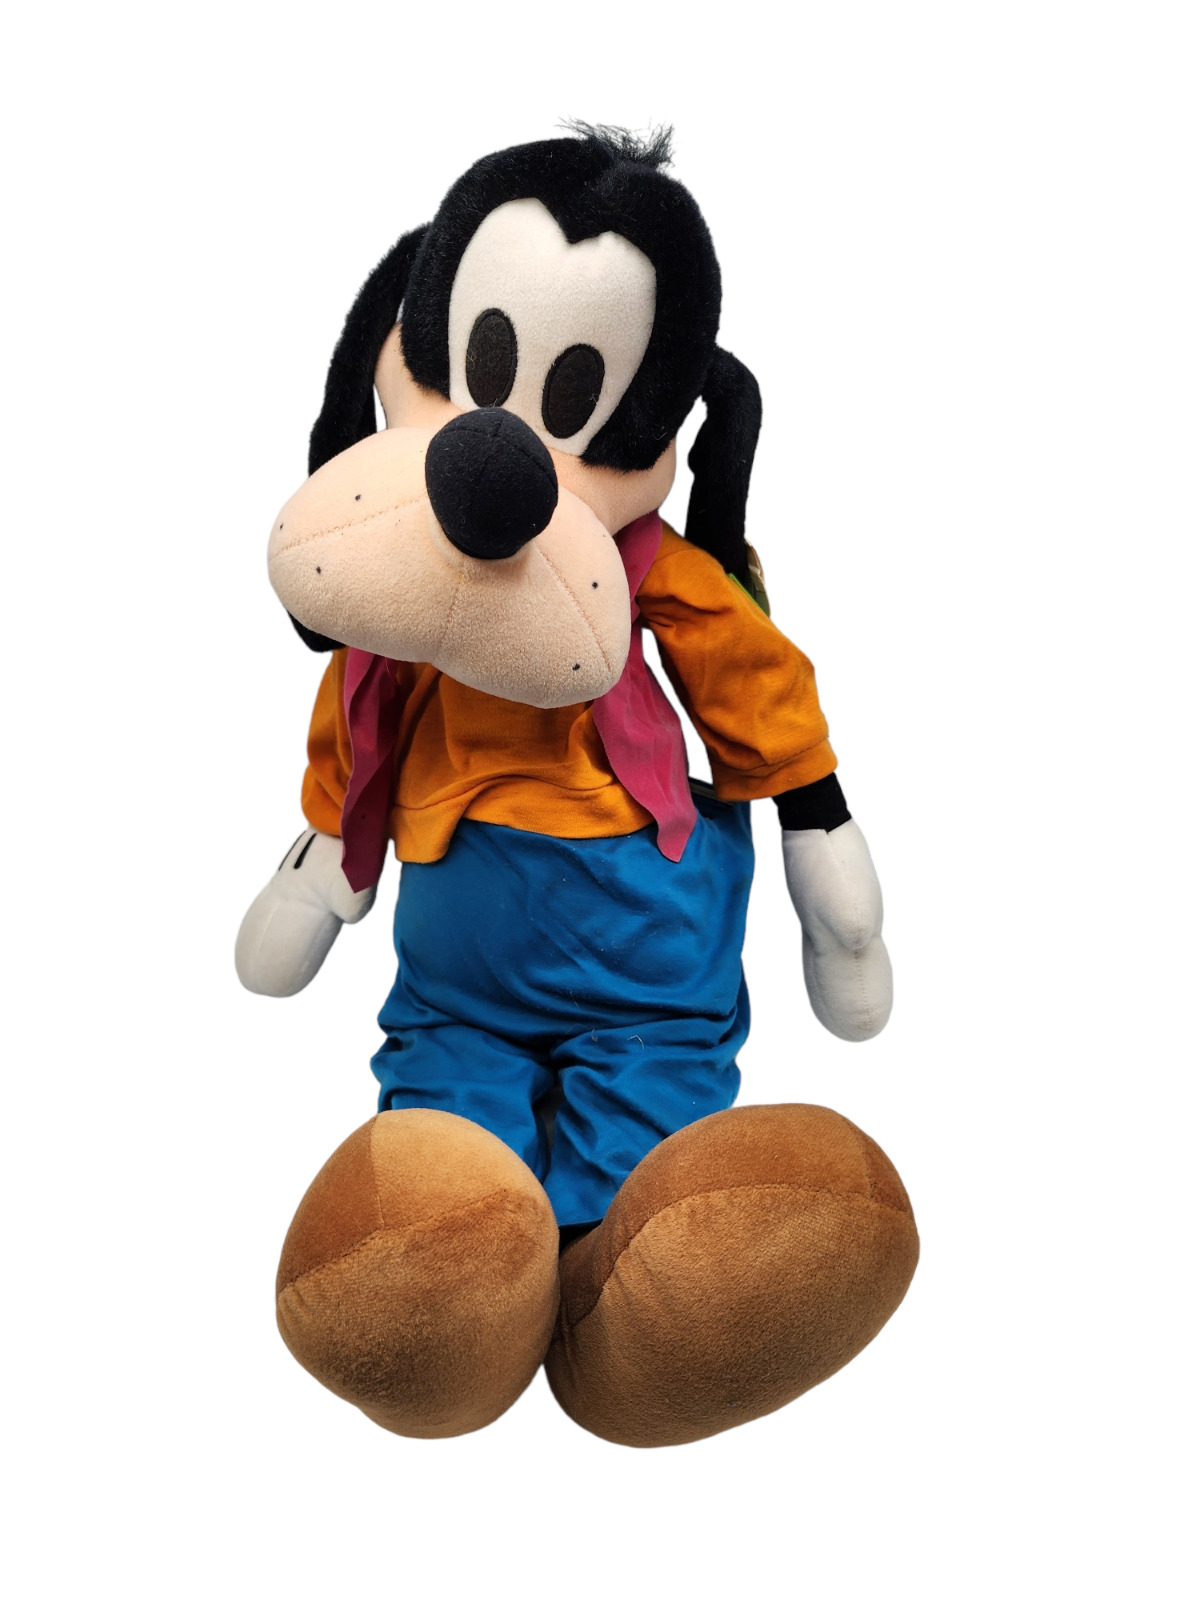 DISNEY Goofy JUMBO PLUSH 28 in Stuffed Animal Disneyland Mouseketoys